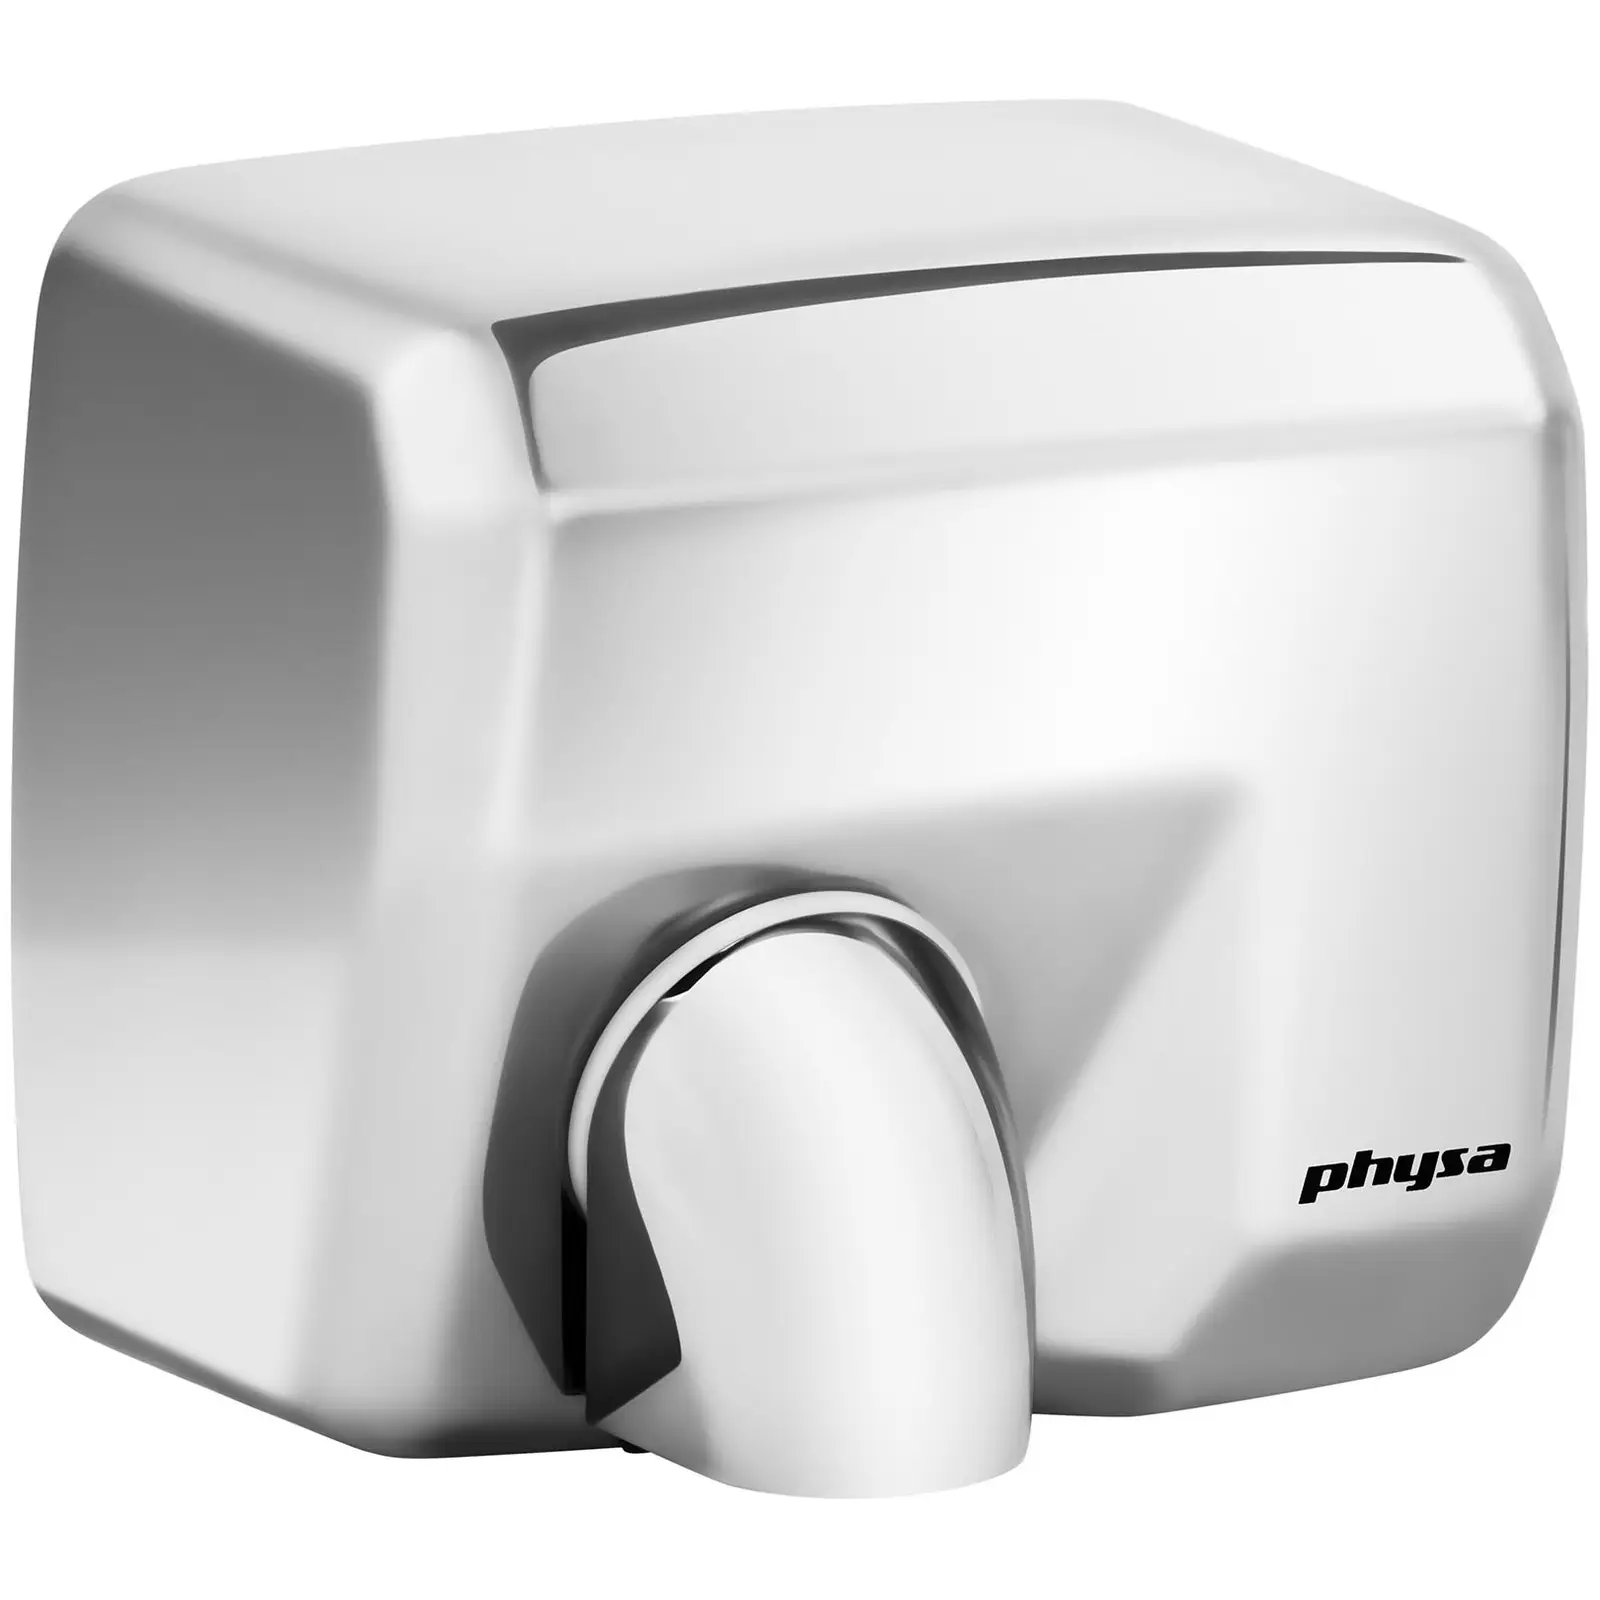 Hand Dryer - 2000 W - Silver